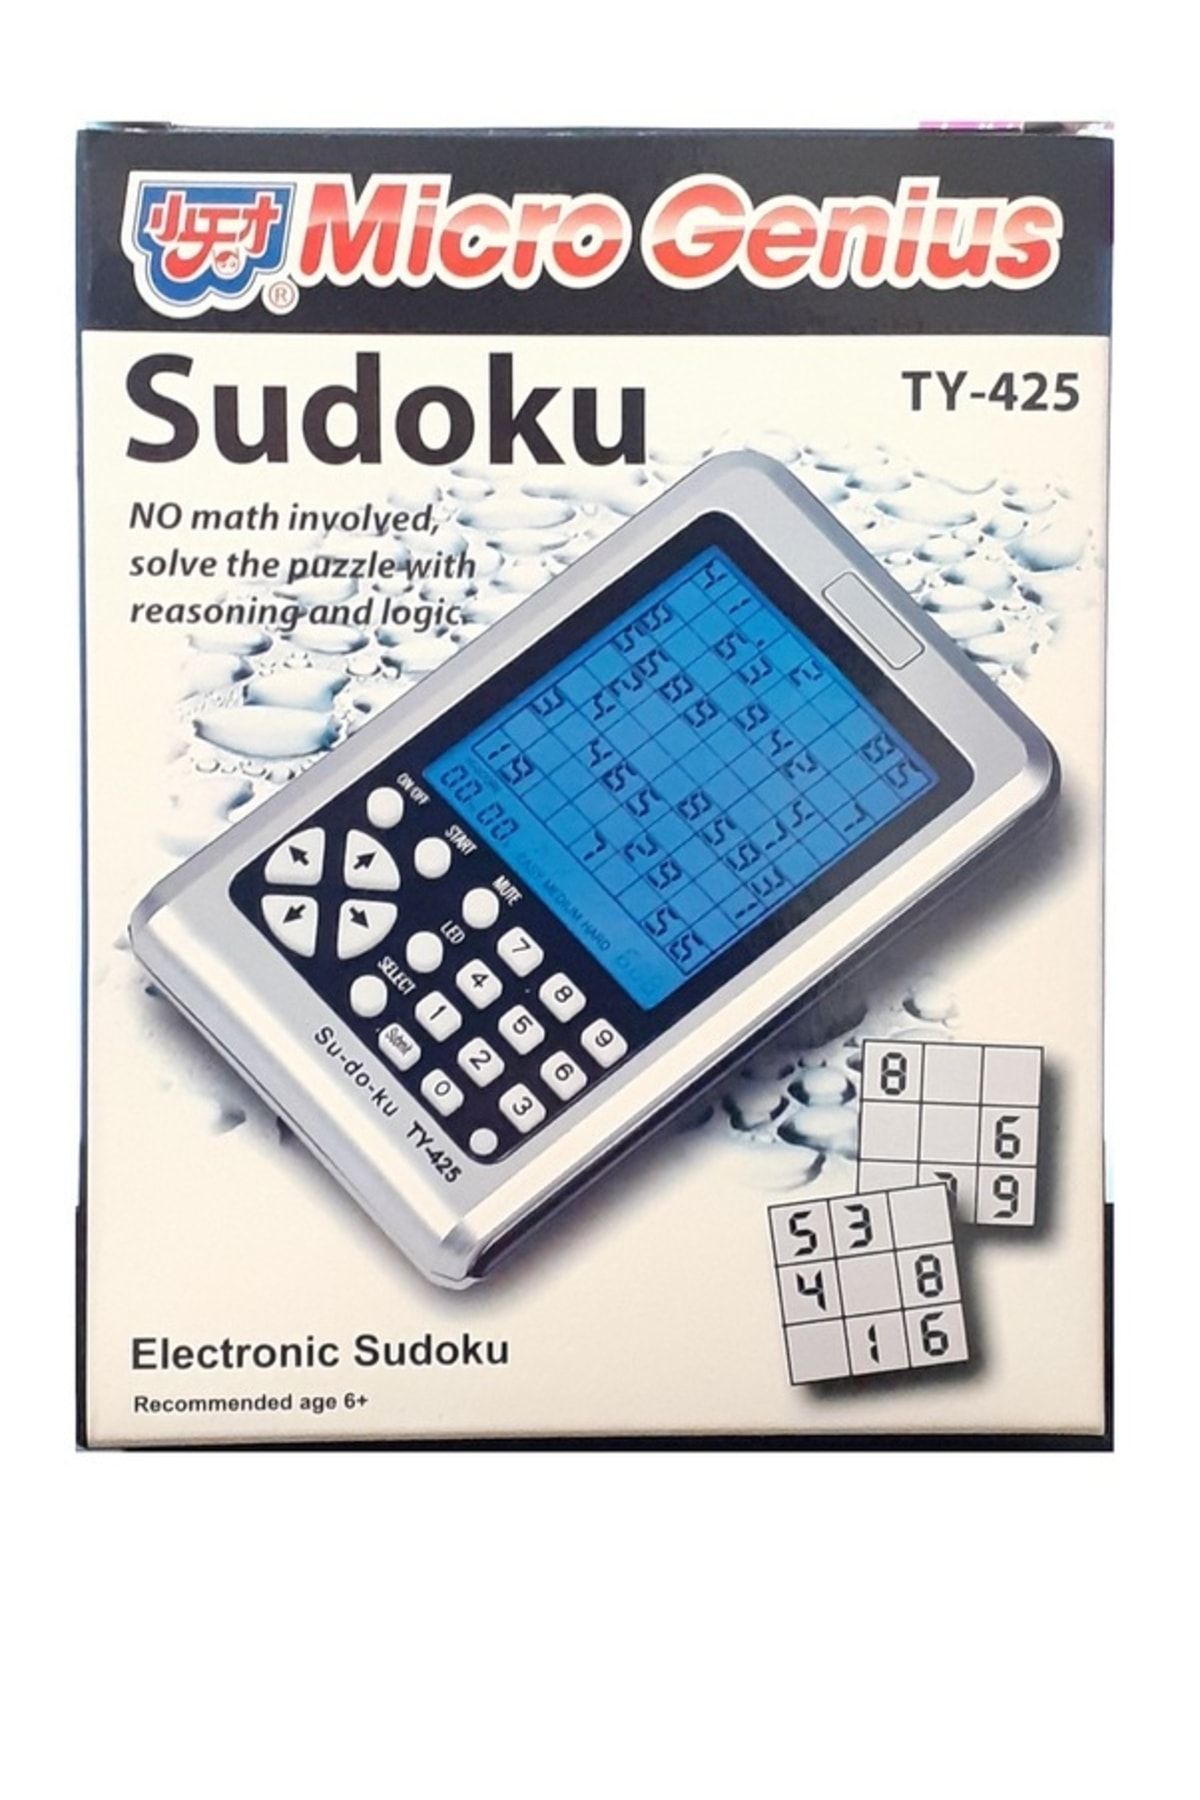 Shape Sudoku Pro by BUCKED GAMES DIJITAL OYUN TEKNOLOJILERI ANONIM SIRKETI